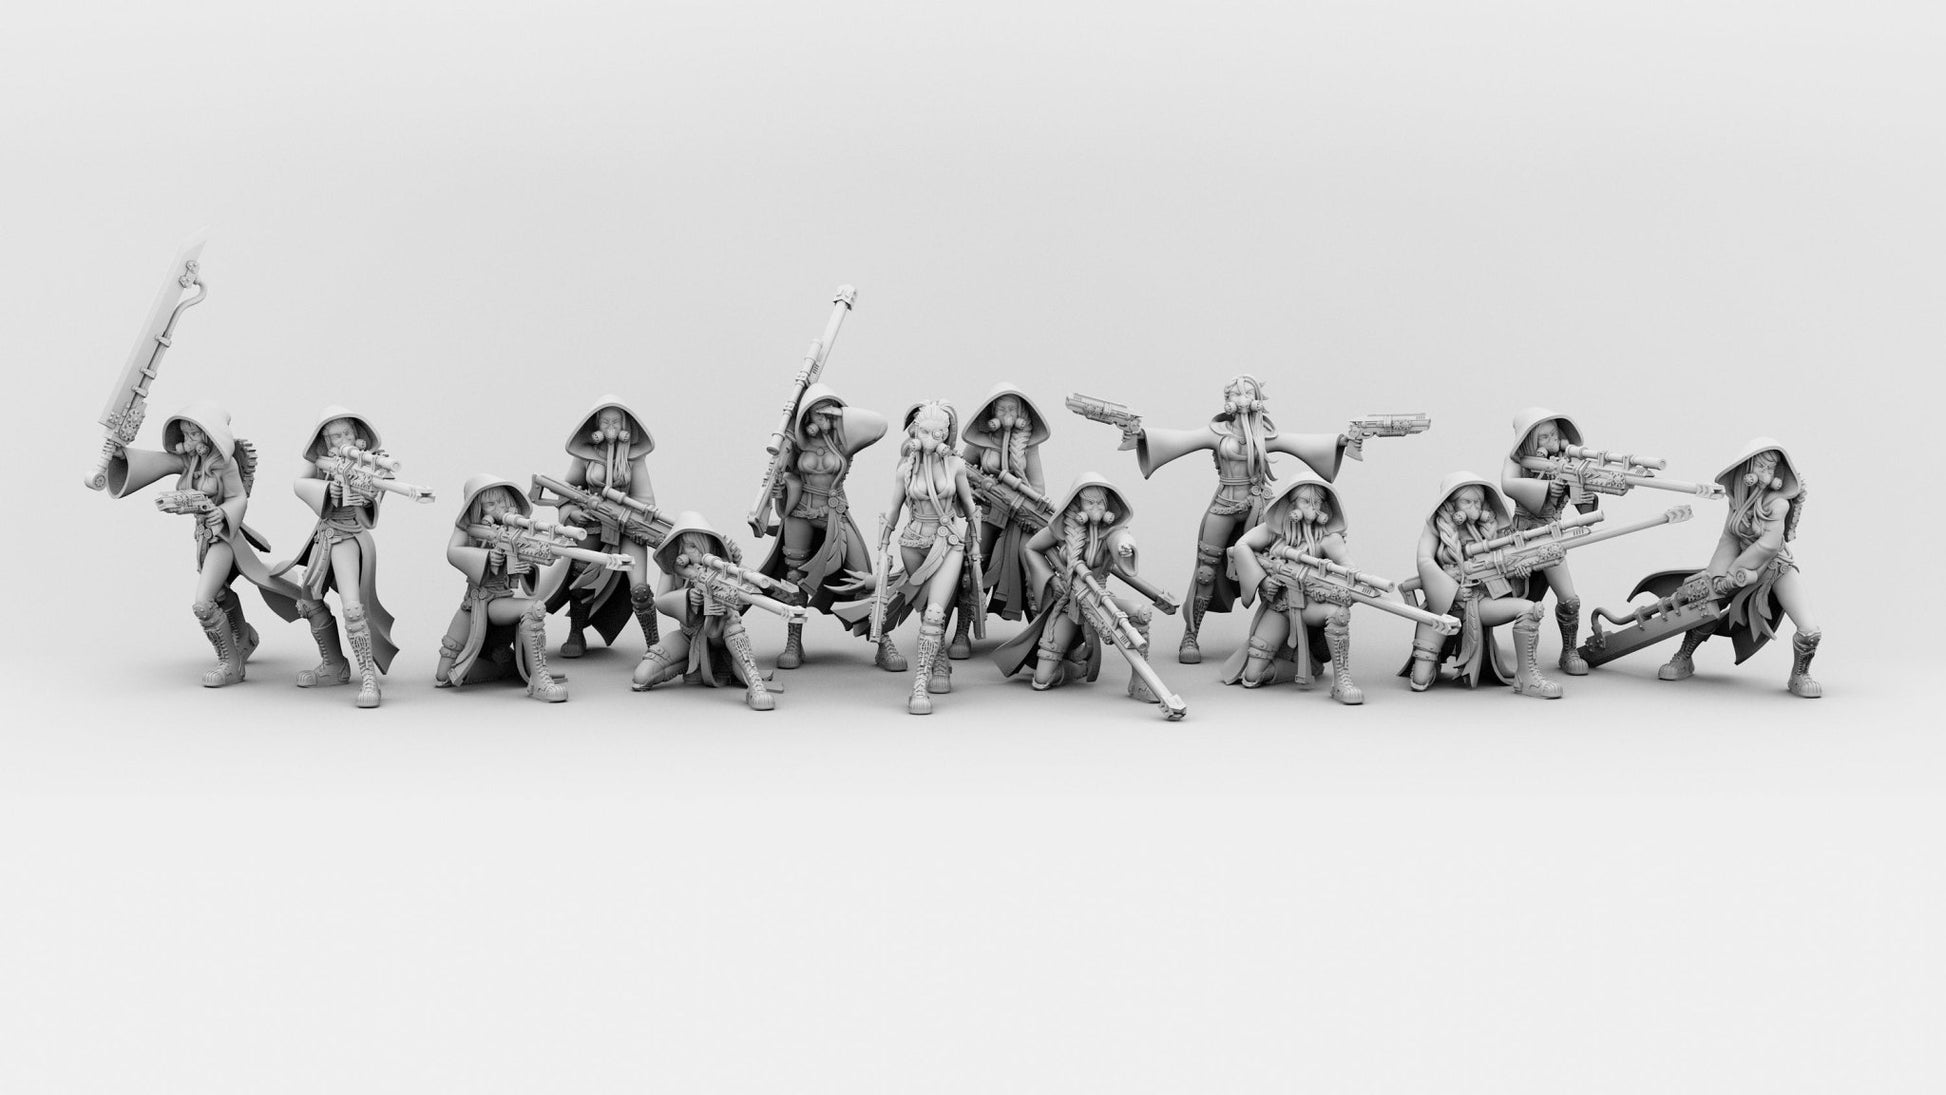 Aurora faction | Trooper Squad | Trooper 12 | 3D Printed | Figurine | Feathr0z